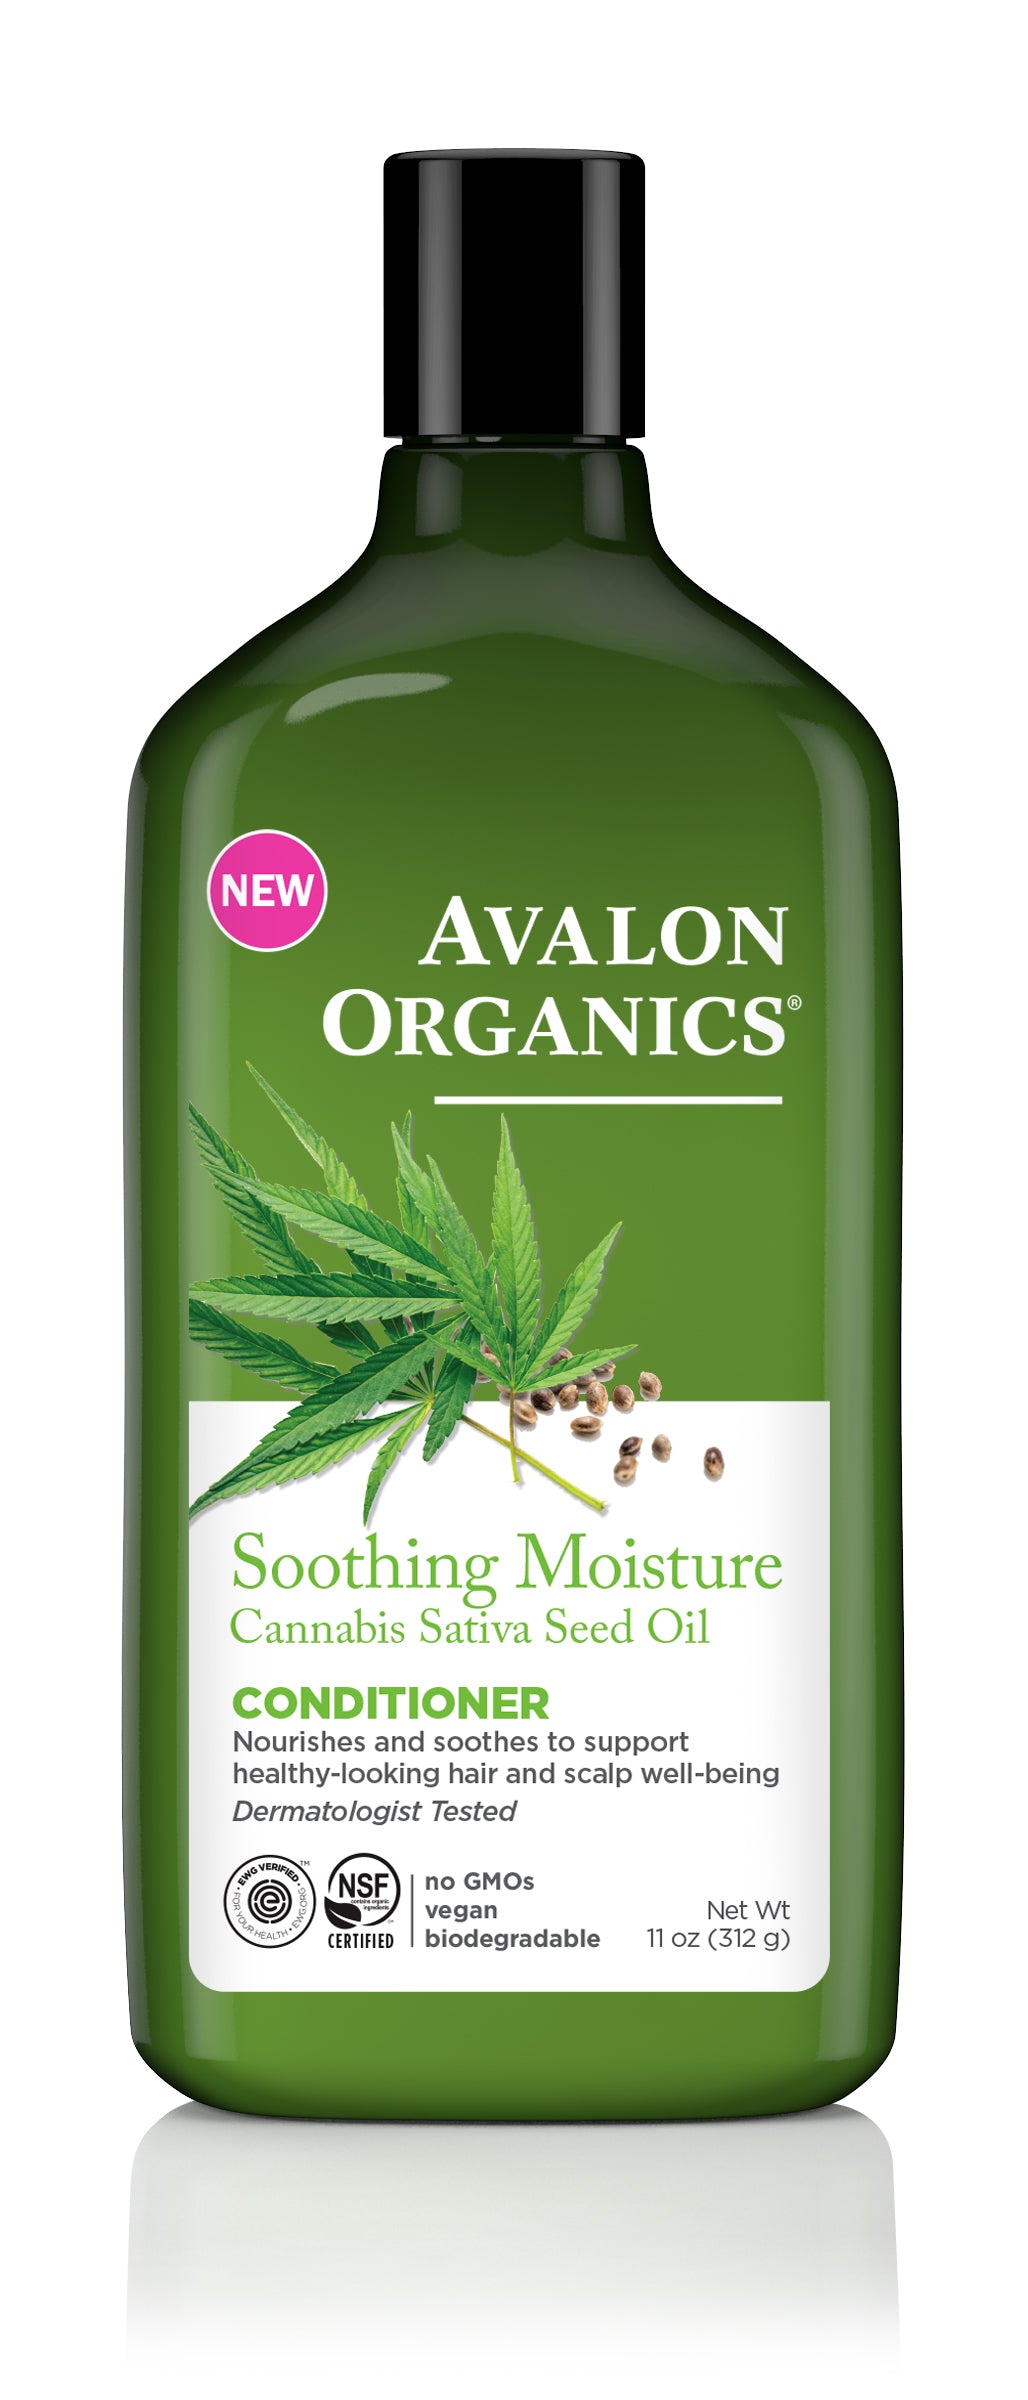 Soothing Moisture Cannabis Sativa Seed Oil